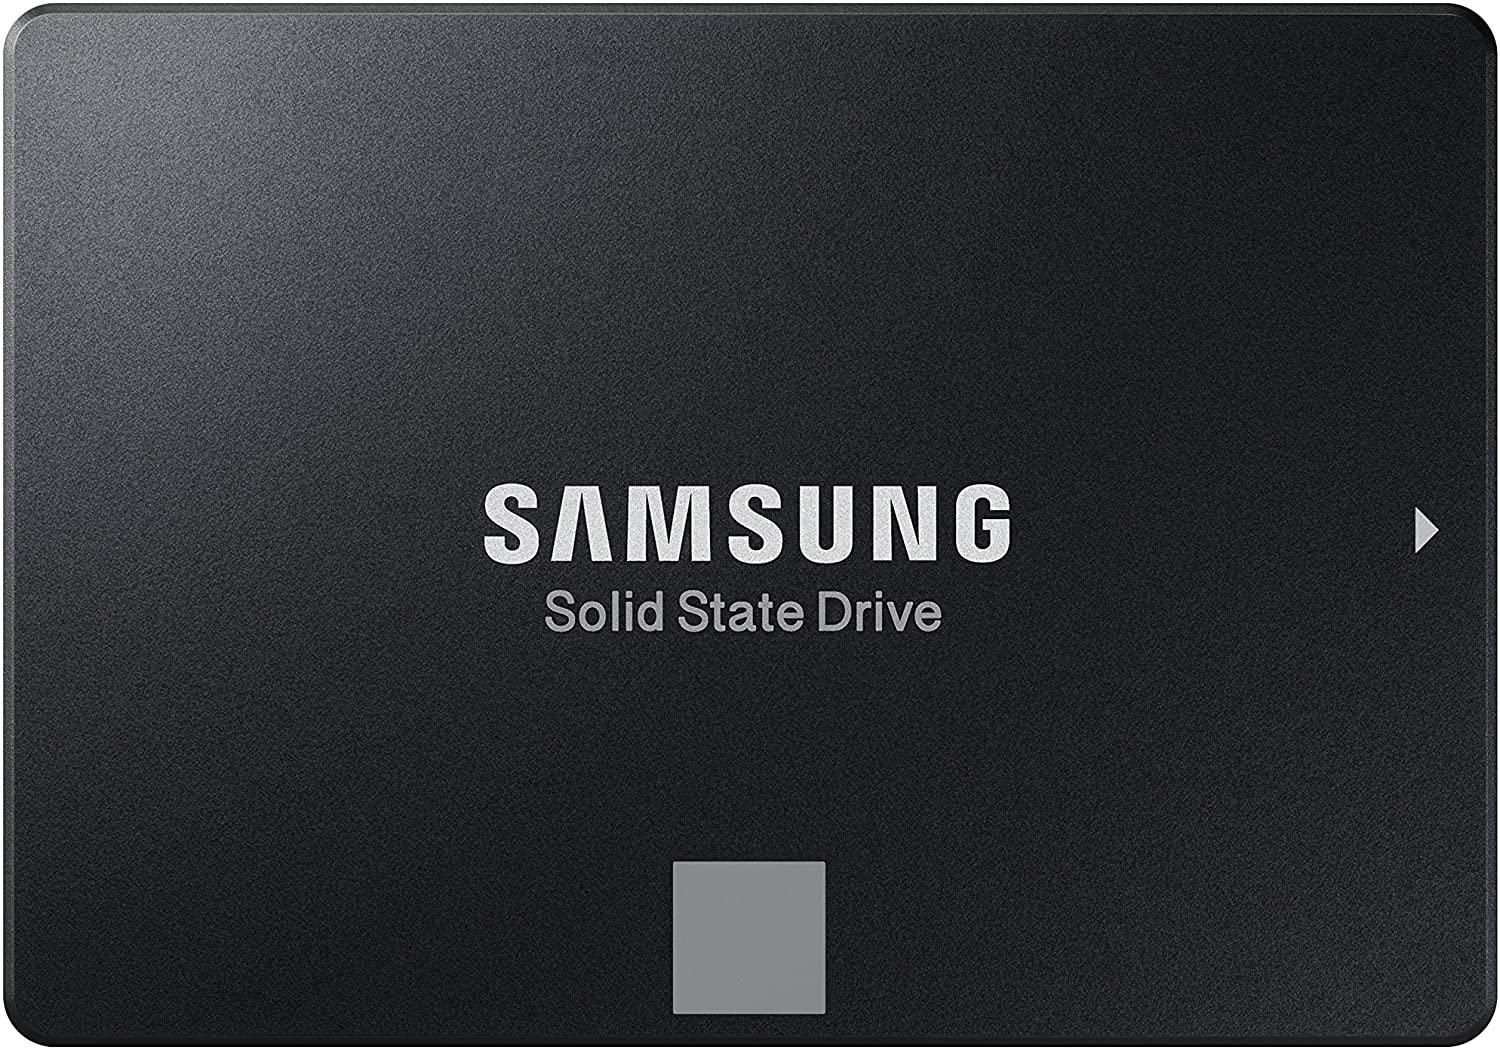 Samsung SSD 860 EVO 1TB Internal SSDS for $99.99 Shipped